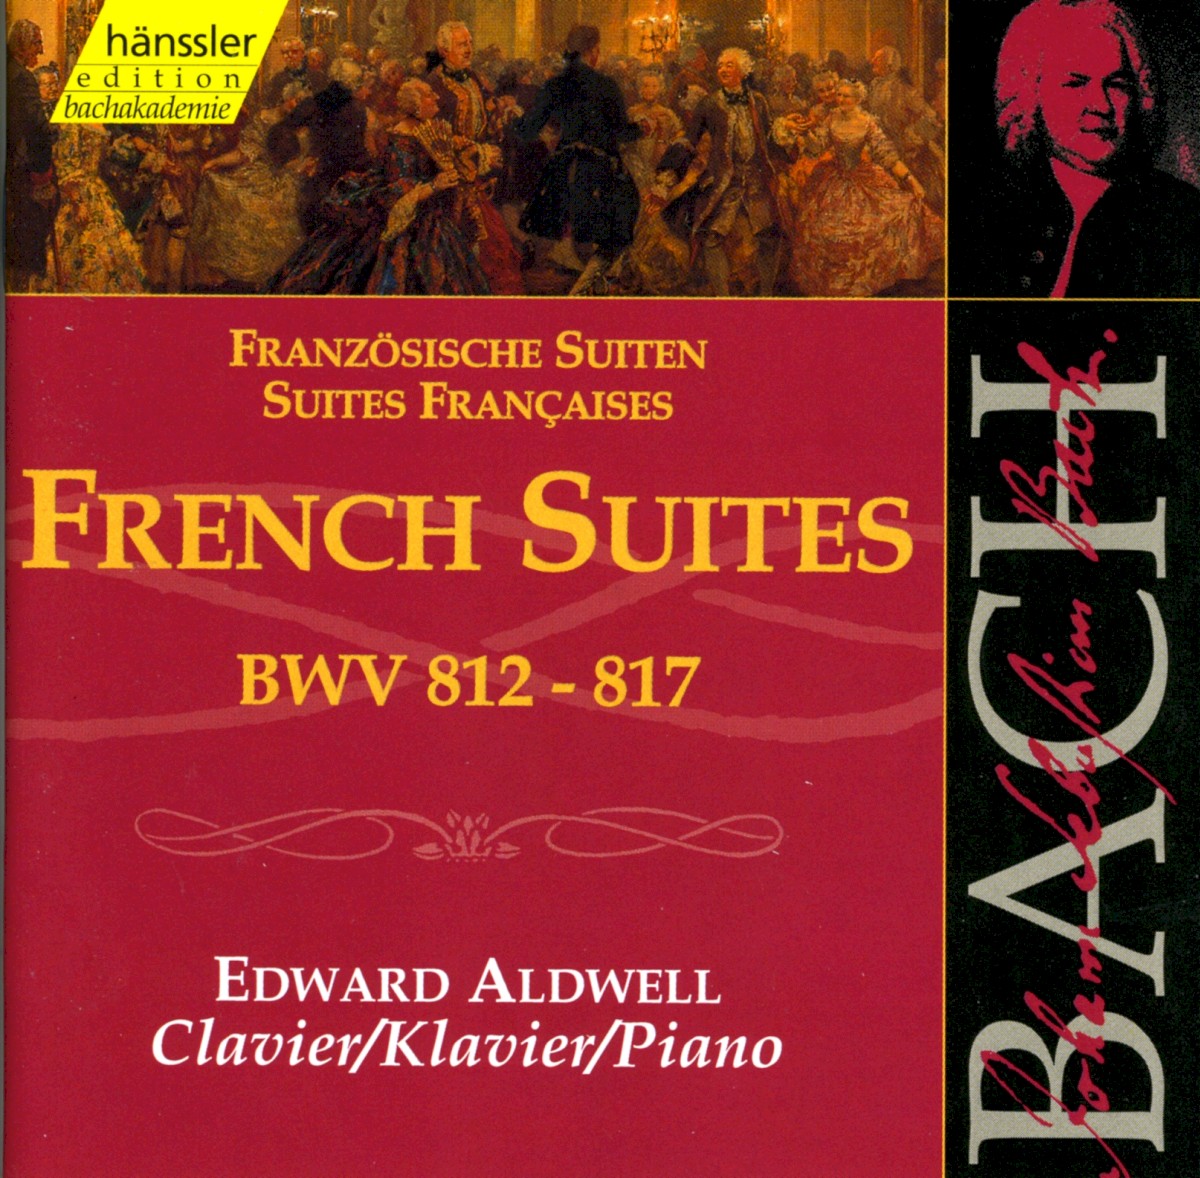 Release “Französische Suiten, BWV 812–817” by Johann Sebastian Bach ...